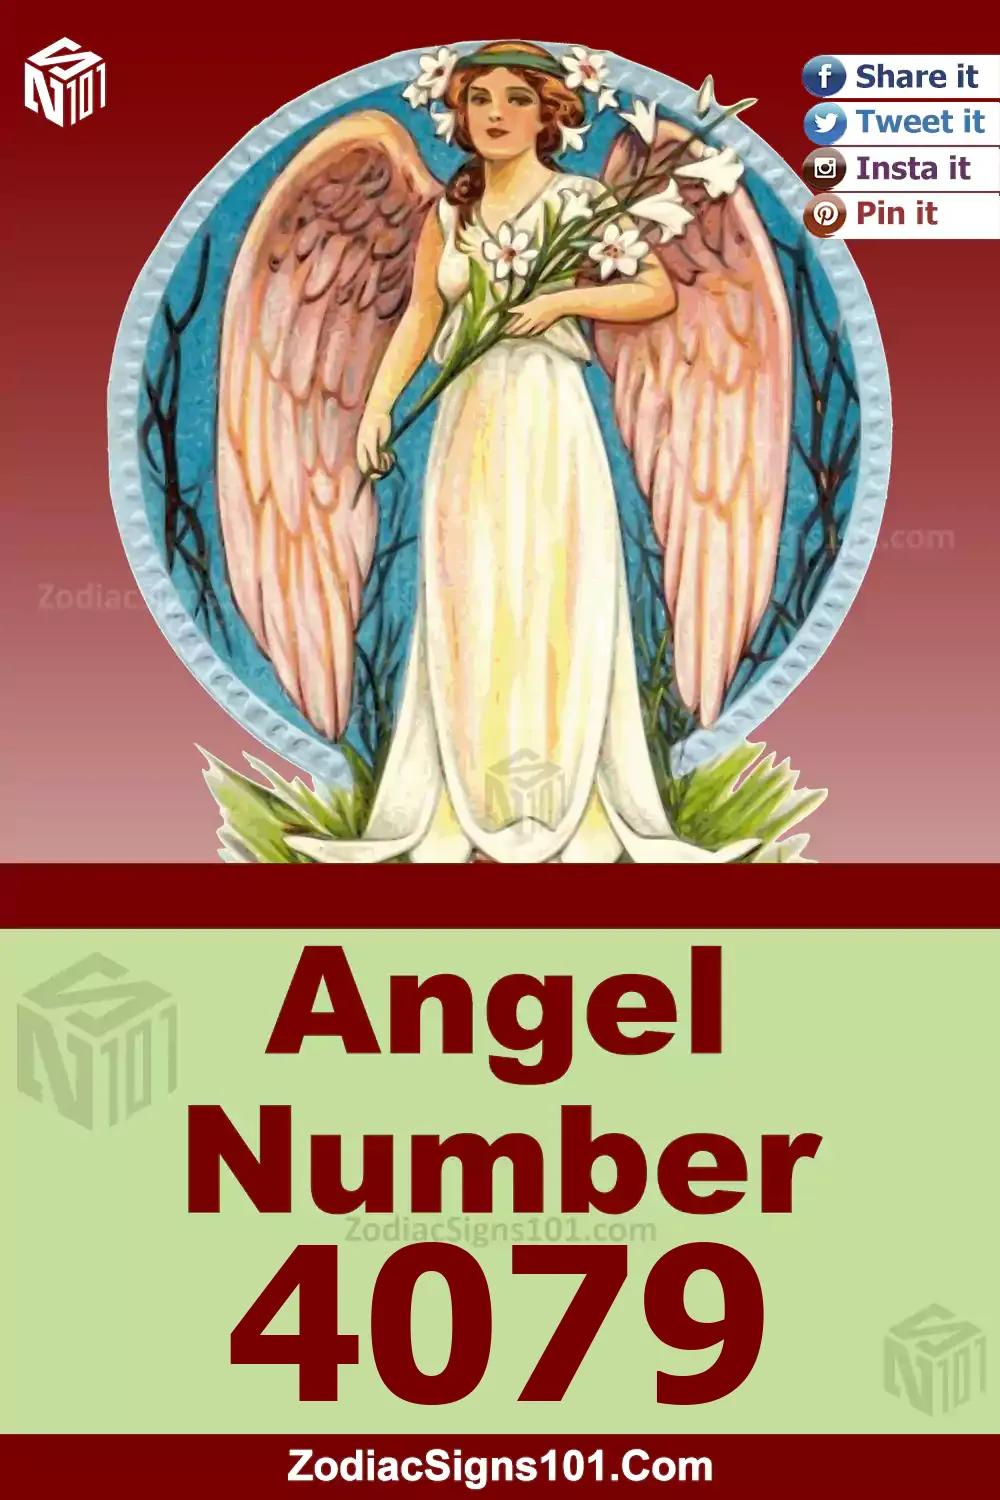 4079-Angel-Number-Meaning.jpg